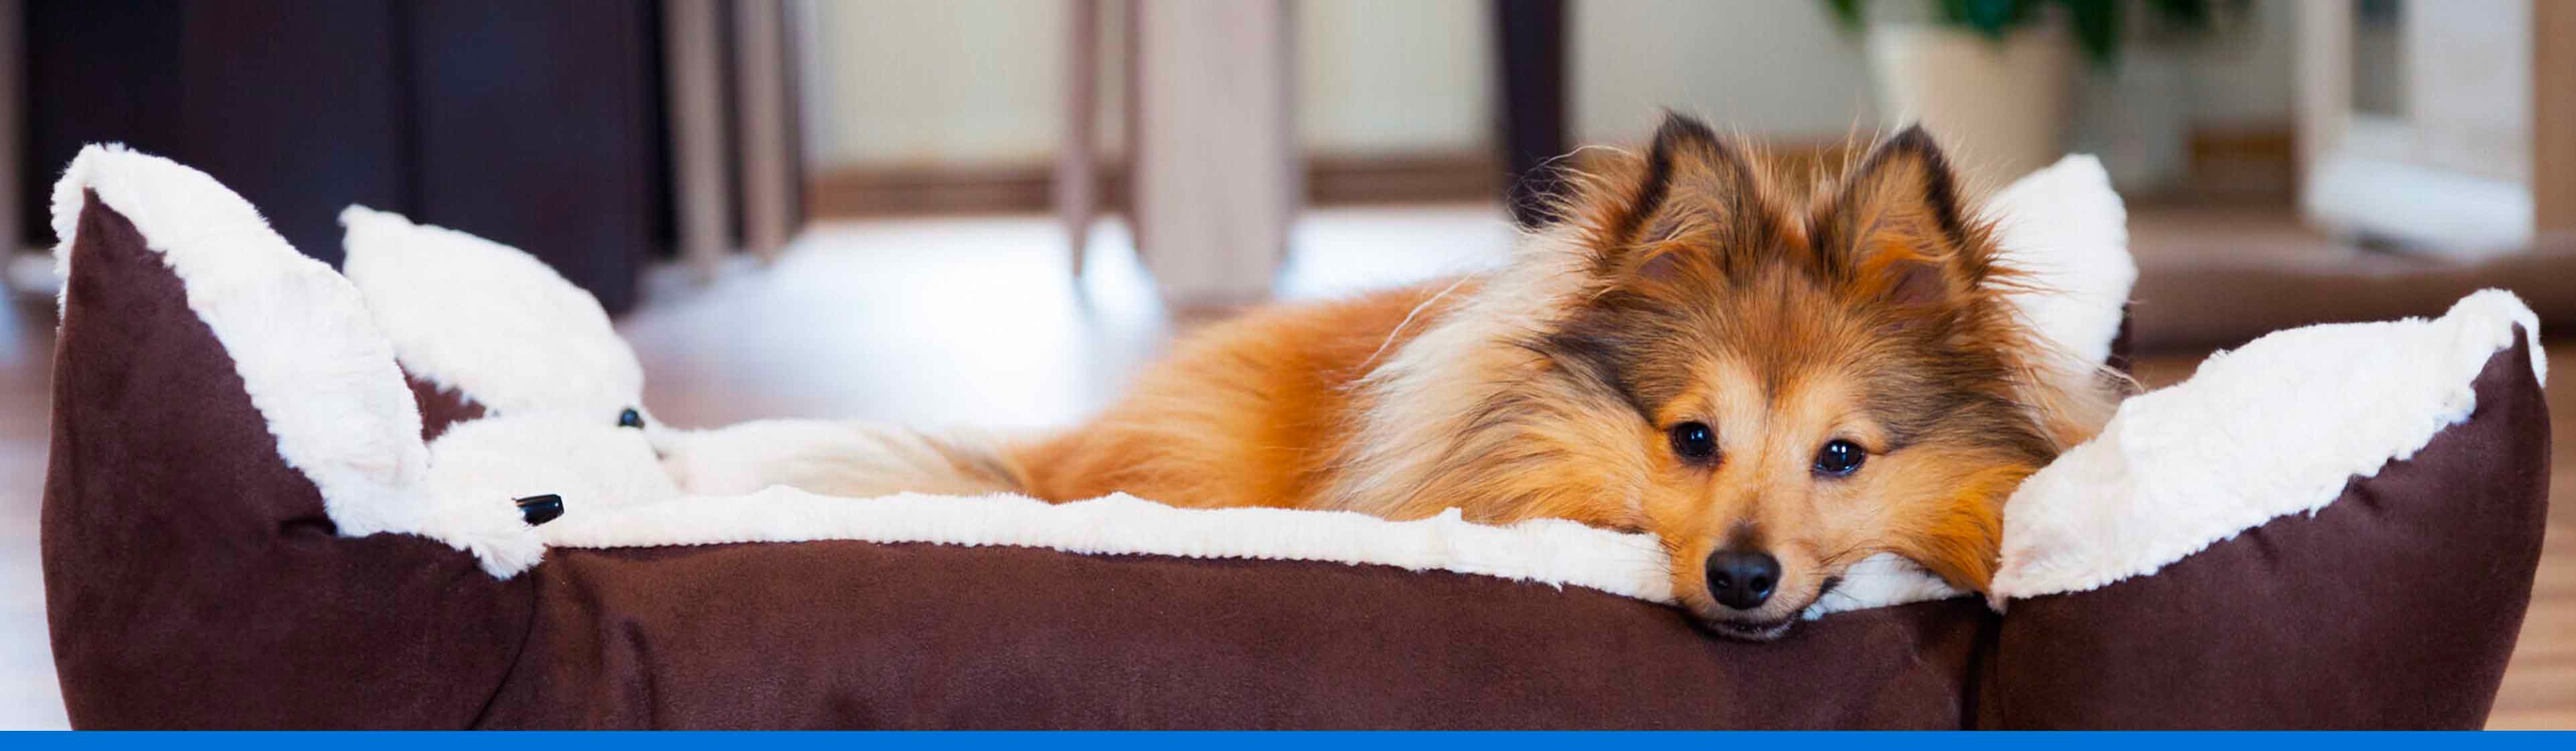 Casas para perros descubre la ideal para tu mascota